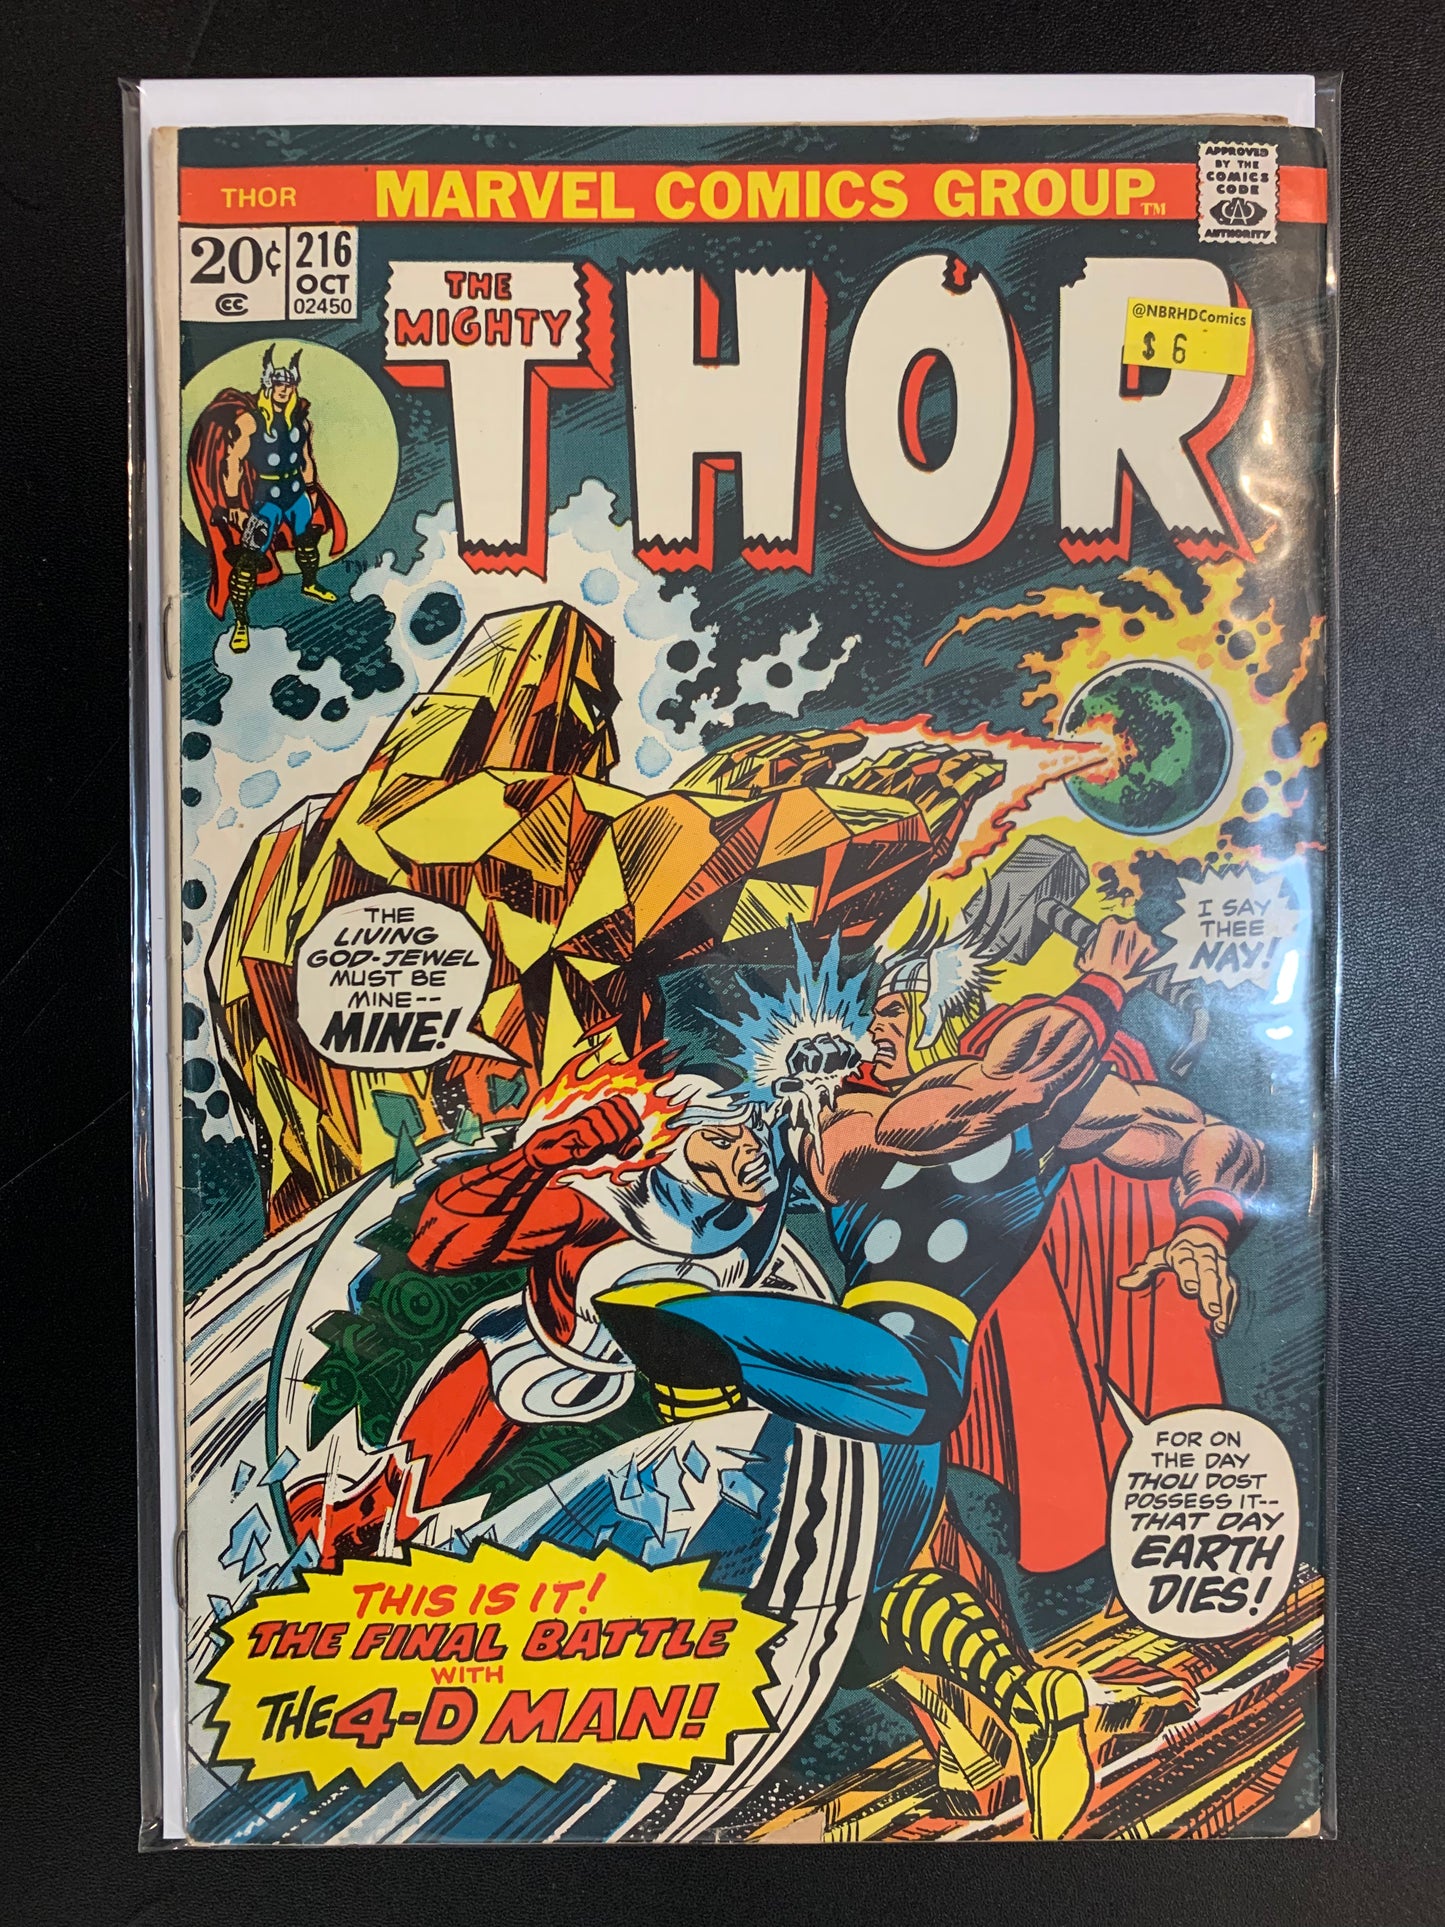 Thor #216 (1962)